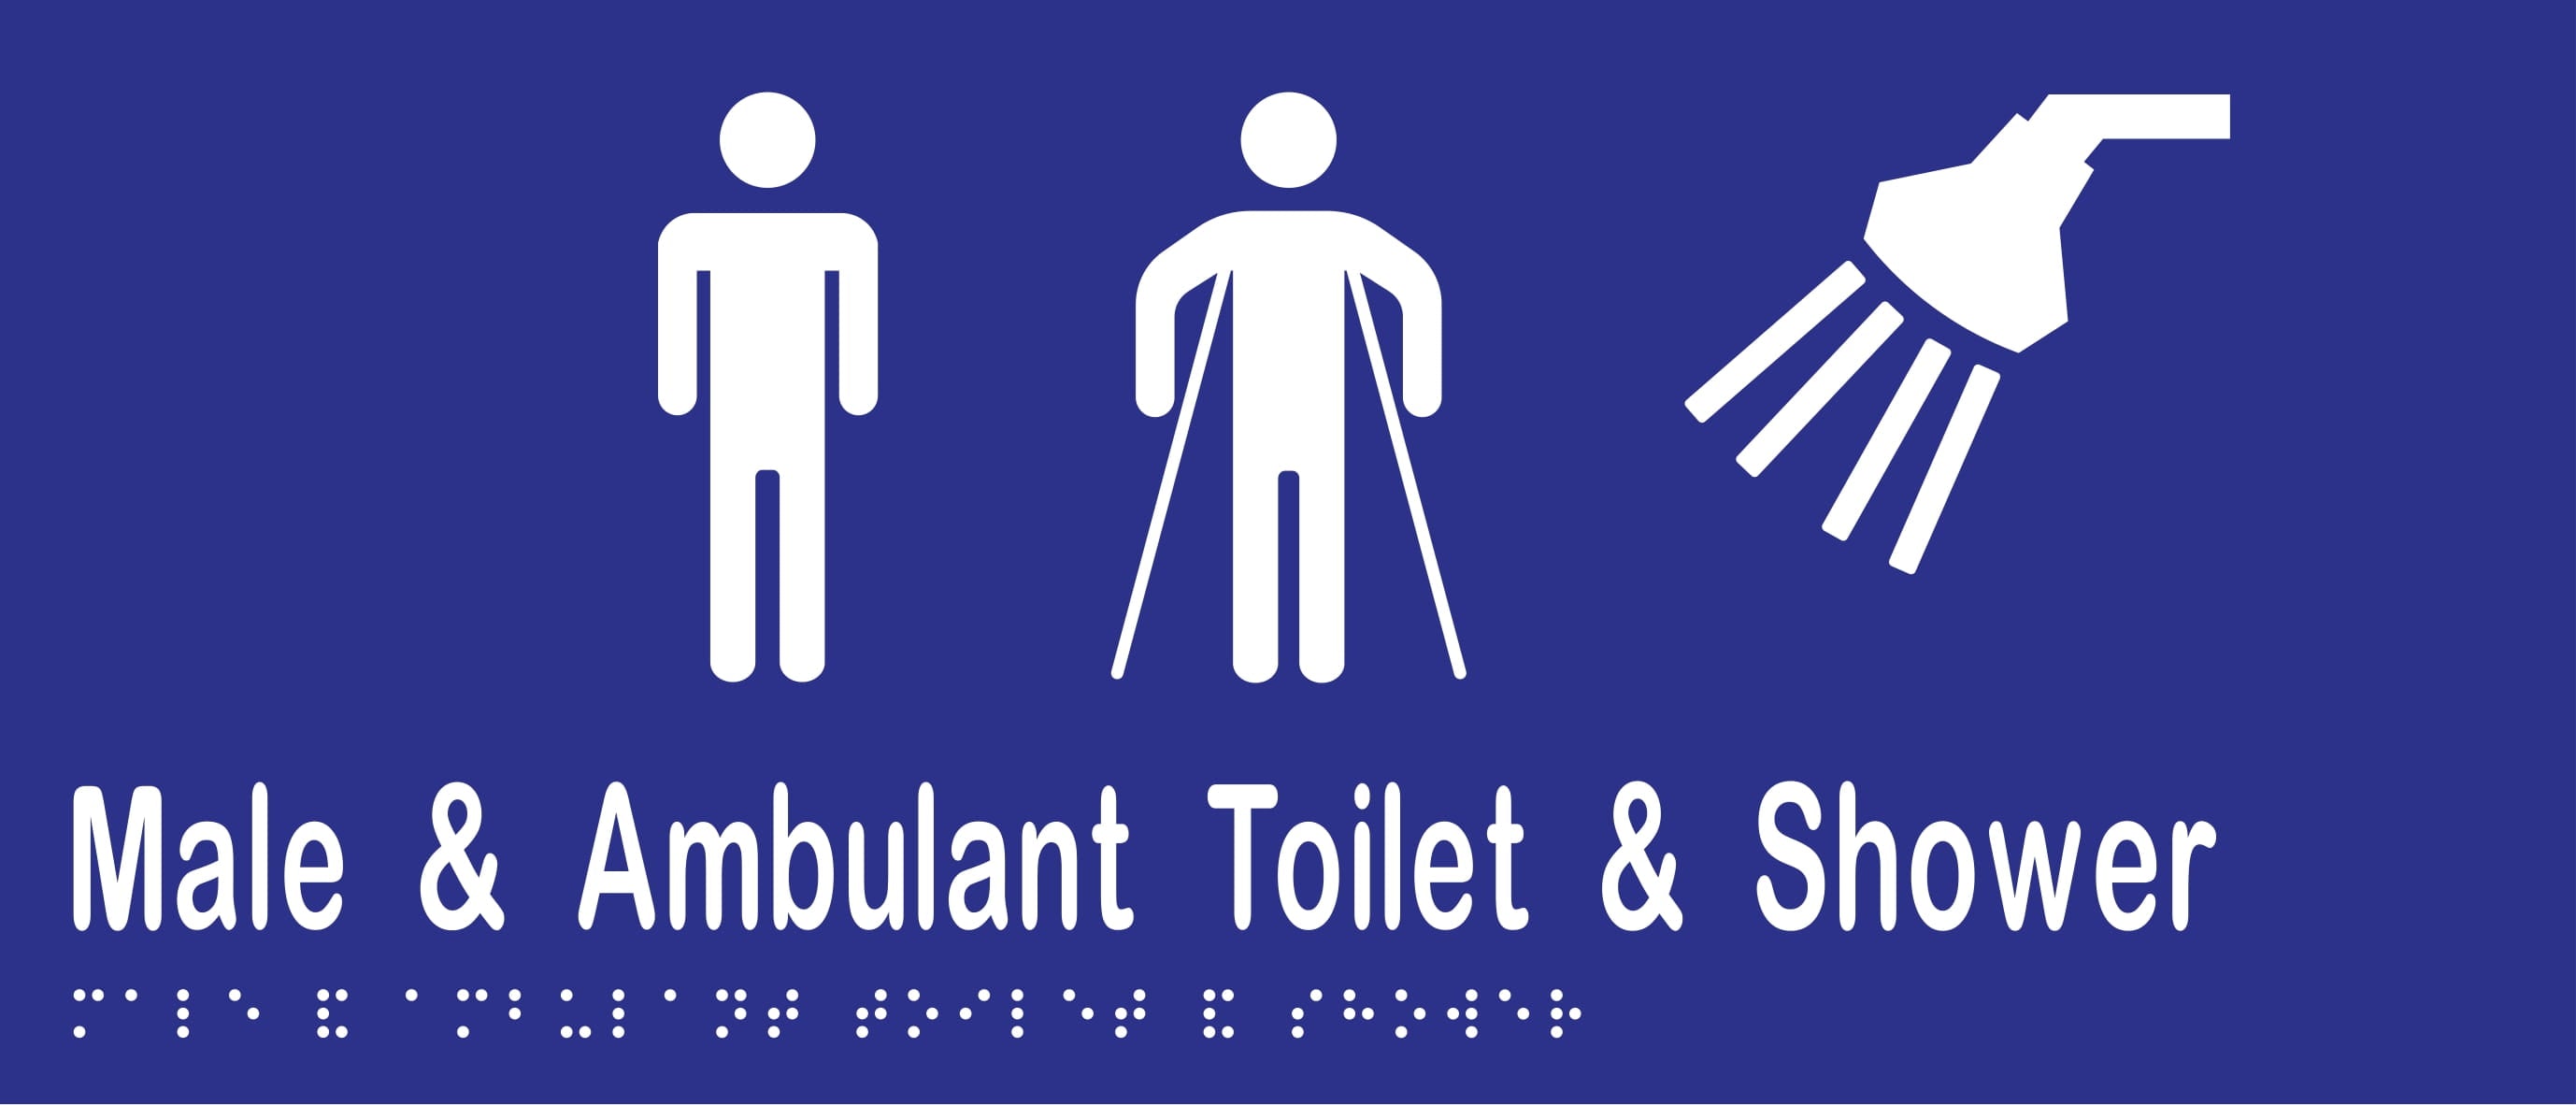 Male & Ambulant Toilet & Shower 350mmW x 150mmH